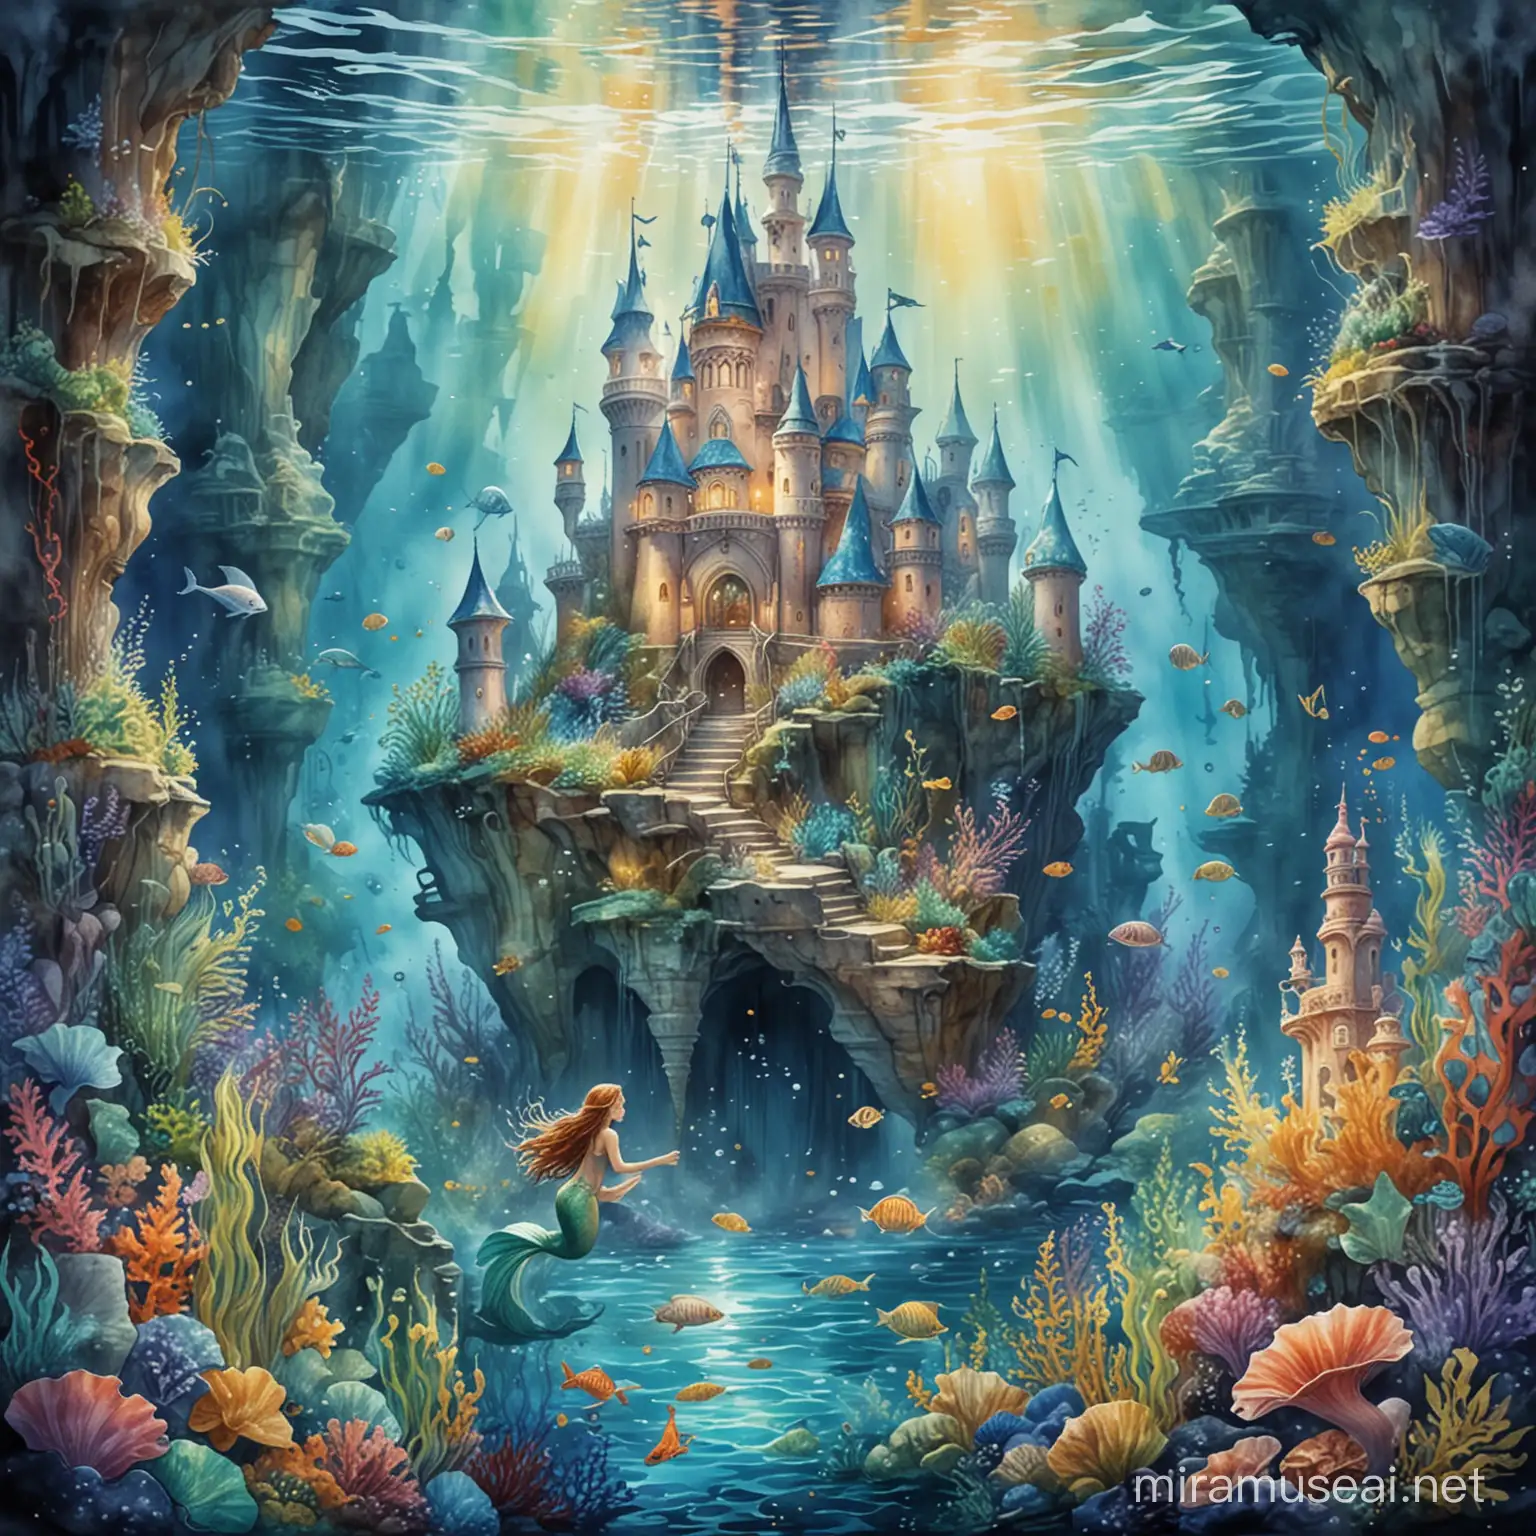 Enchanted Underwater World Mermaids and Treasure Hunter in Watercolor Oil Painting